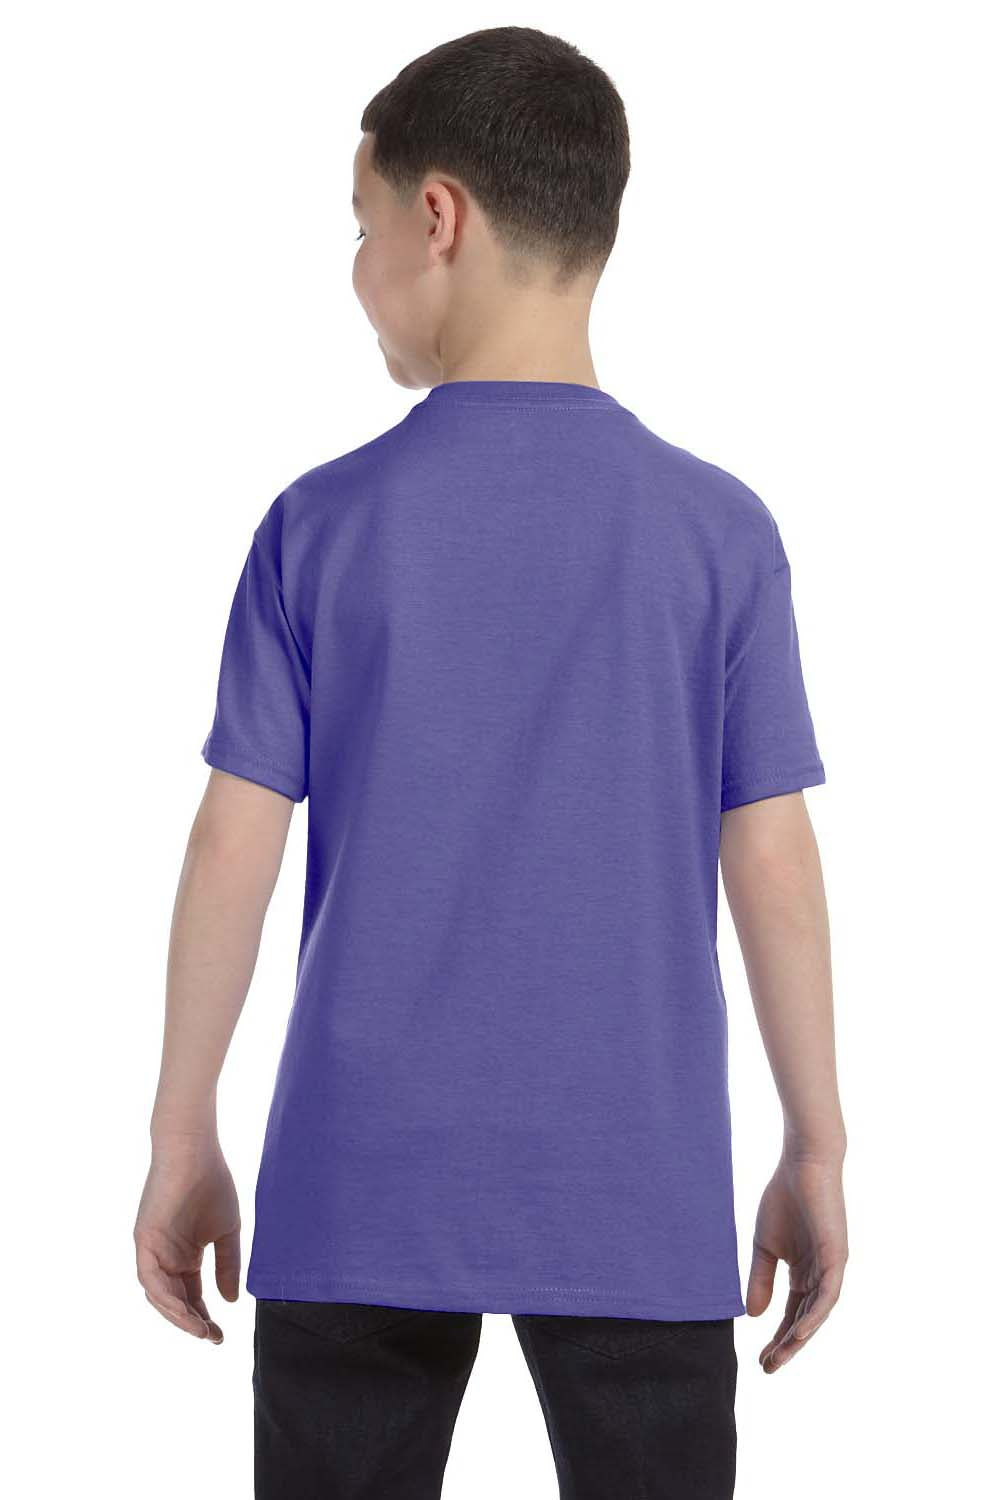 Gildan G500B Youth Short Sleeve Crewneck T-Shirt Violet Purple Back